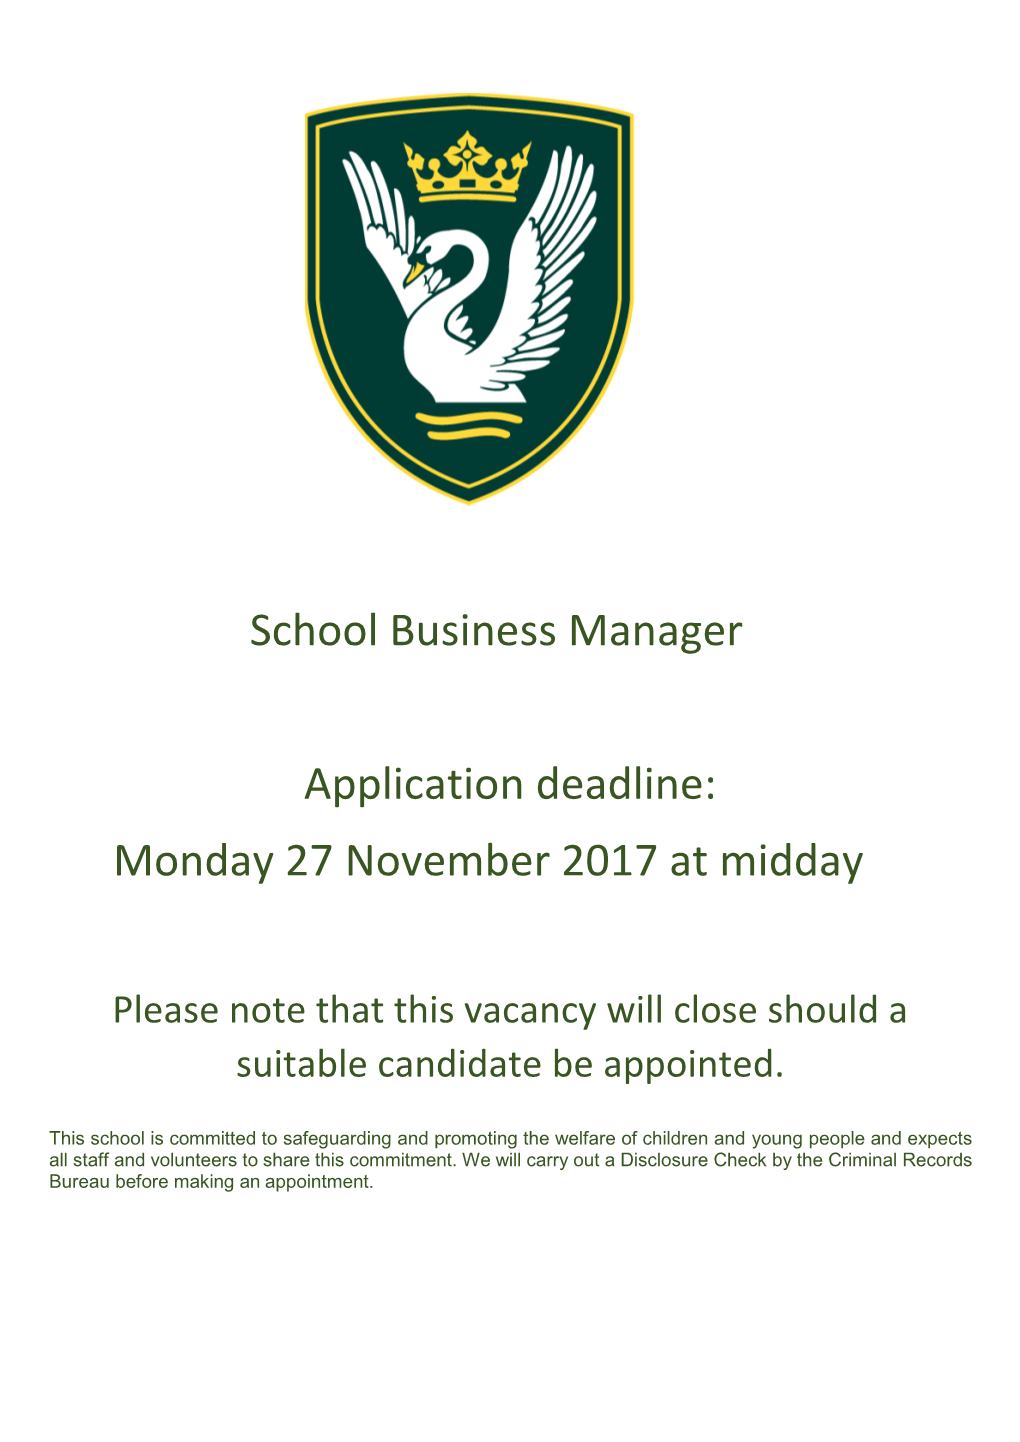 School Business Manager Application Deadline